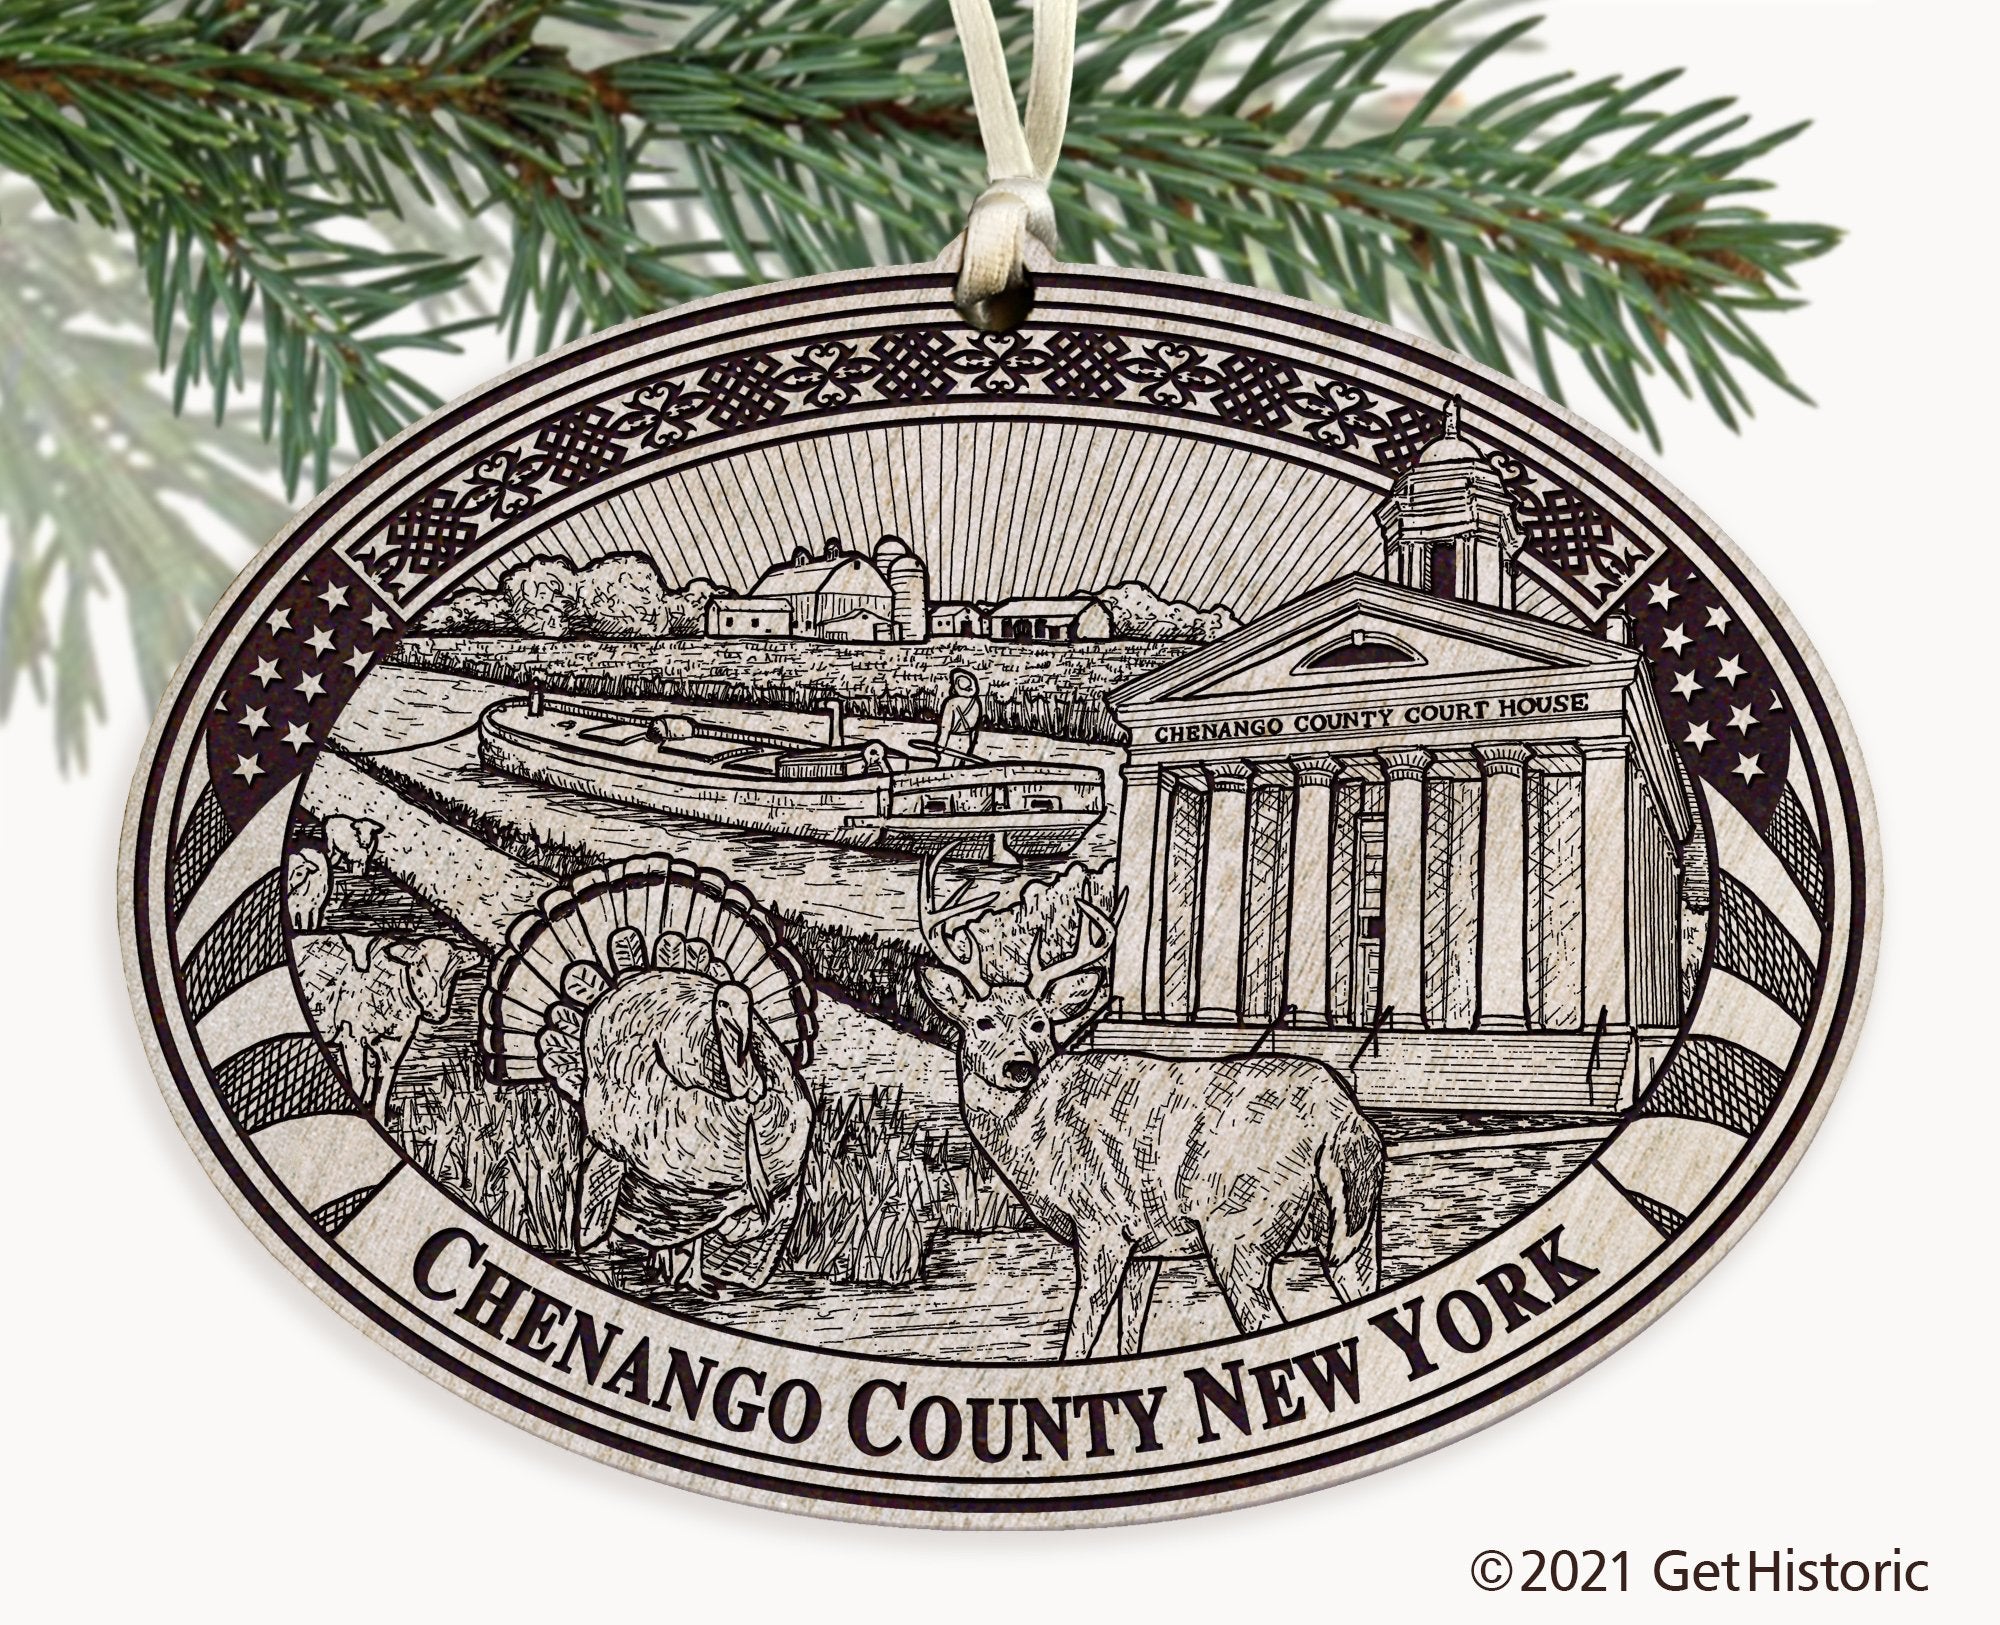 Chenango County New York Engraved Ornament